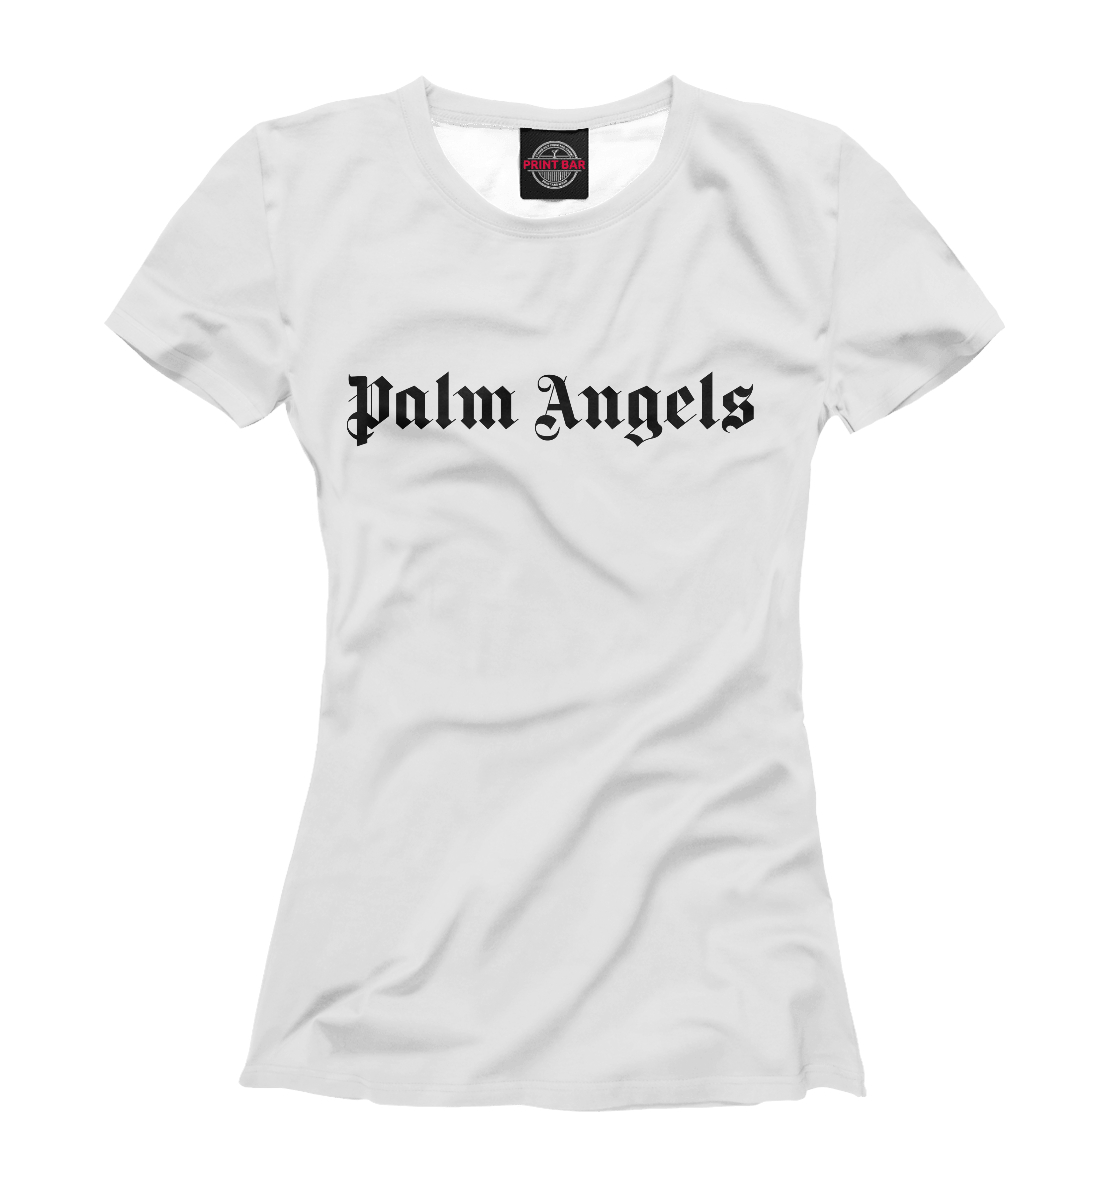 Футболка Palm Angels для девочек, артикул: APD-799321-fut-1mp